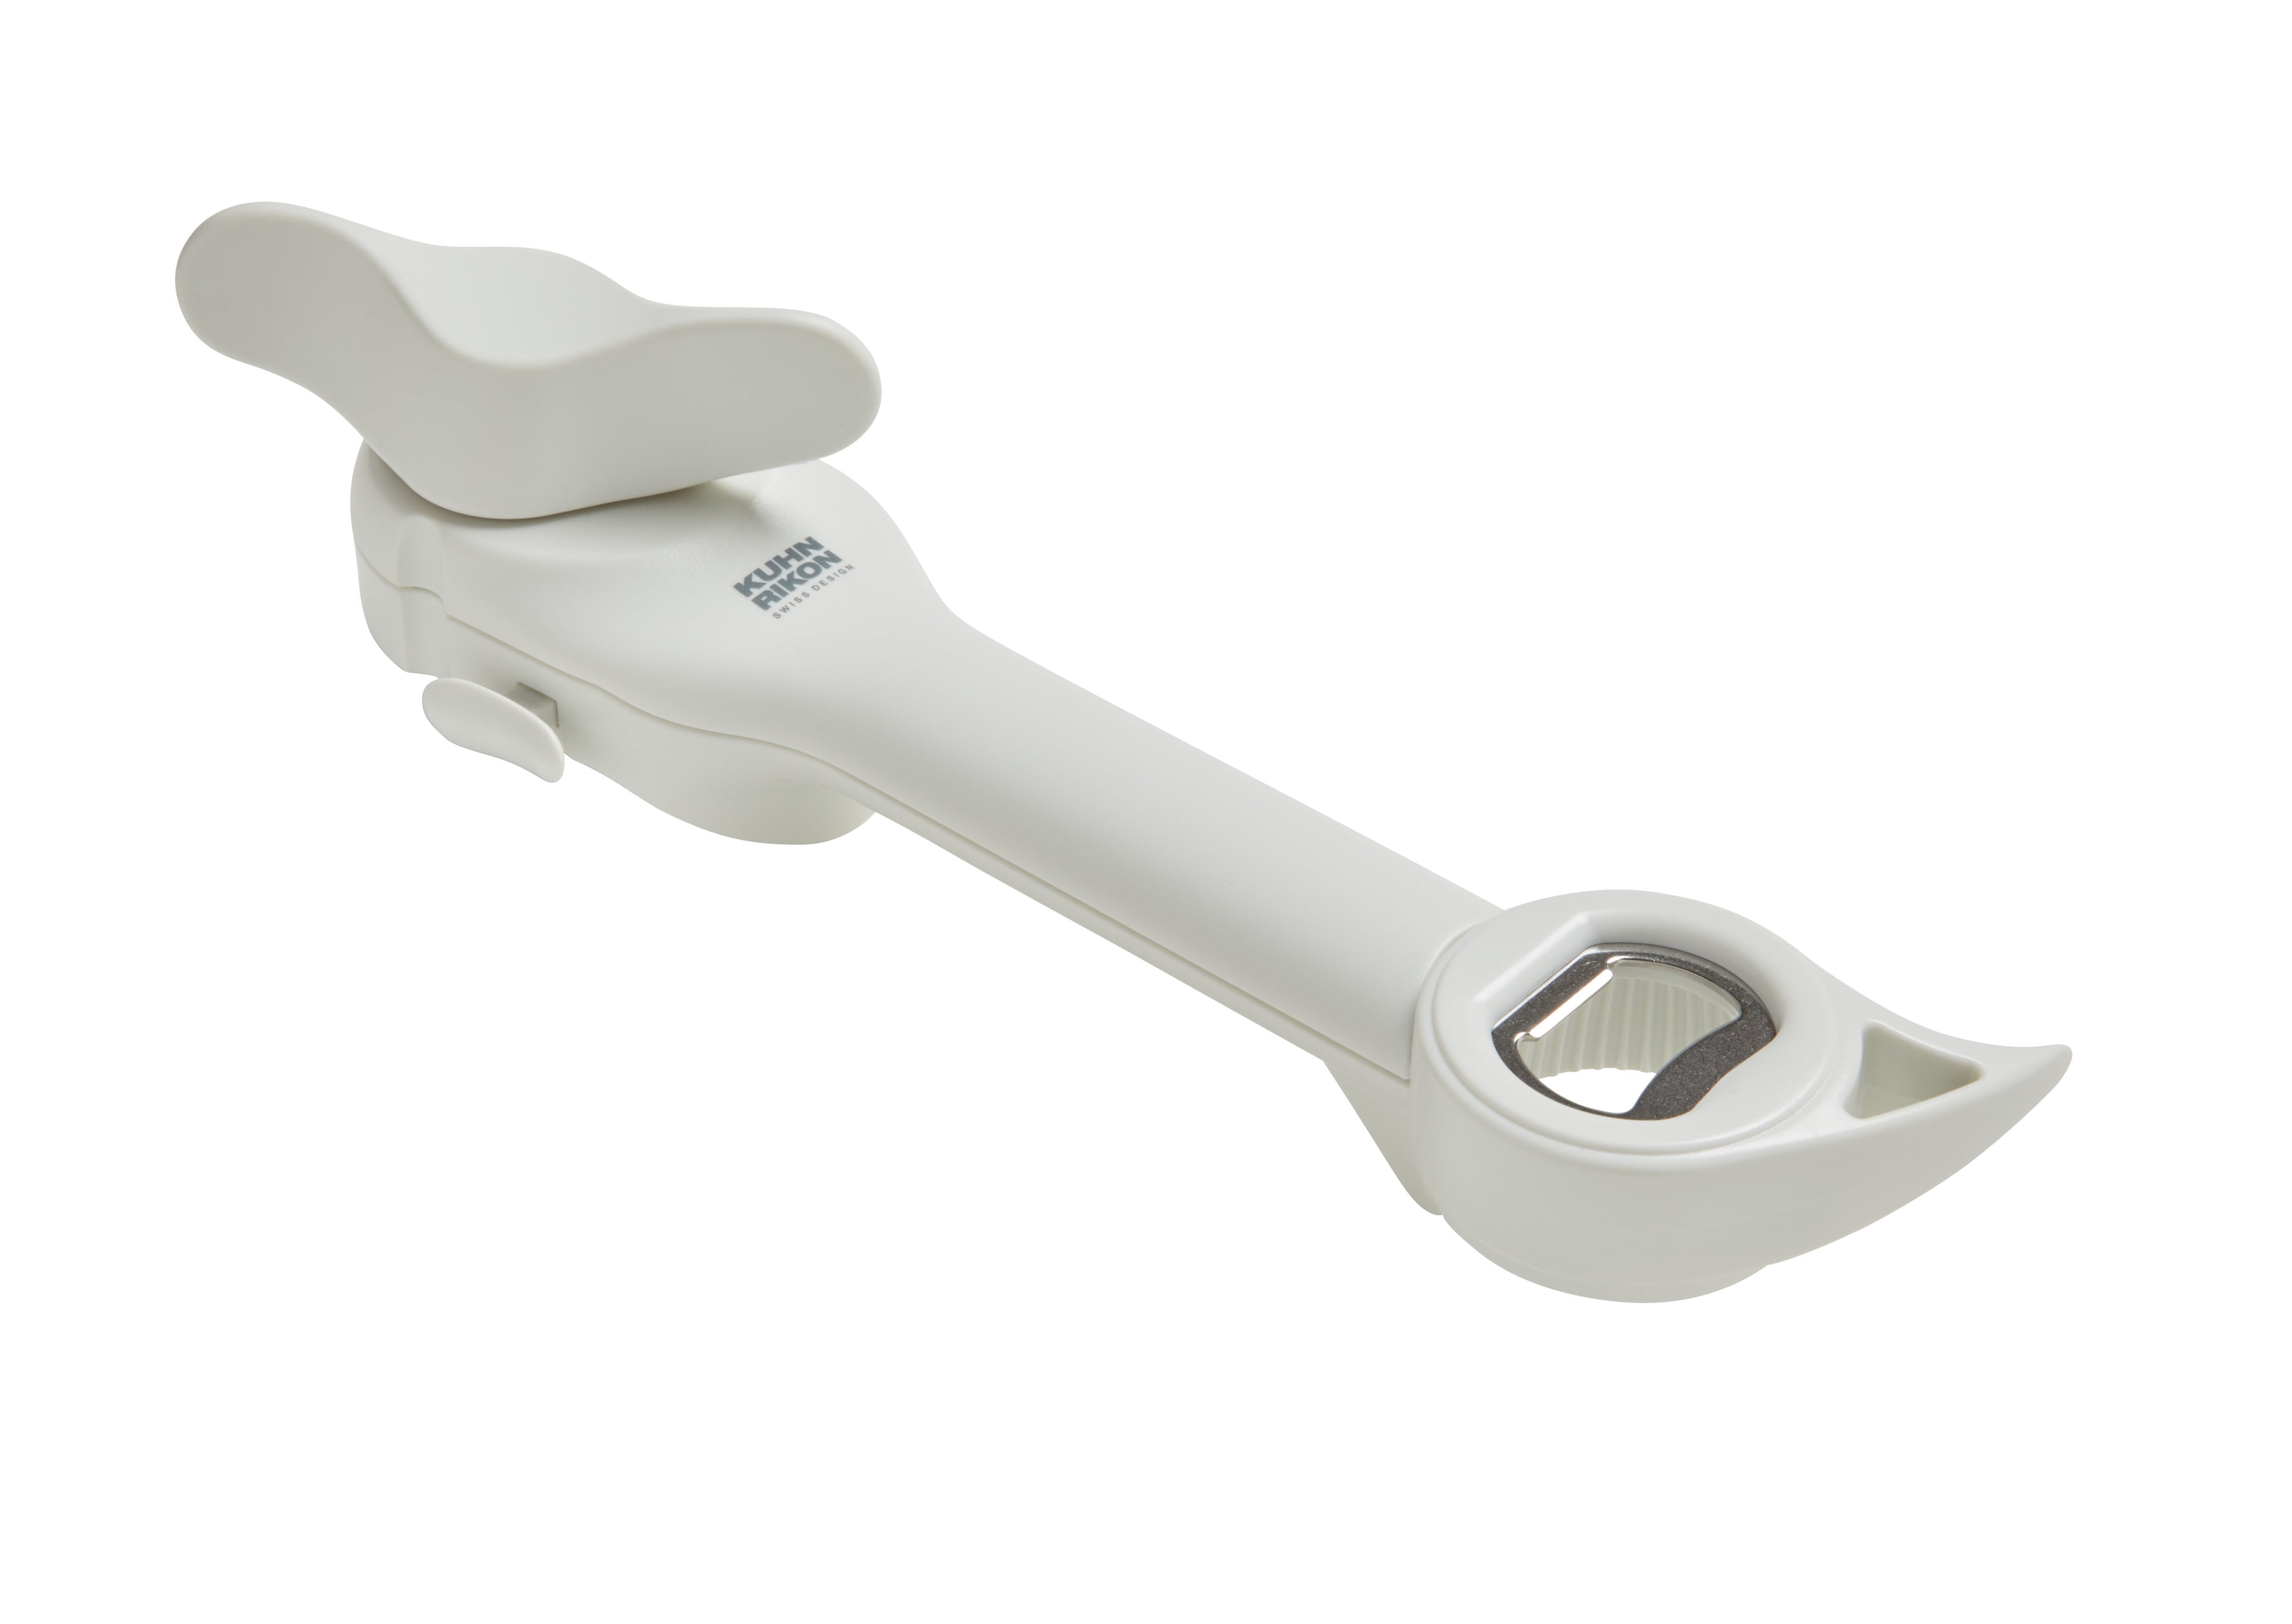 KUHN RIKON White Handheld Strain-Free Gripper Opener for Jars and